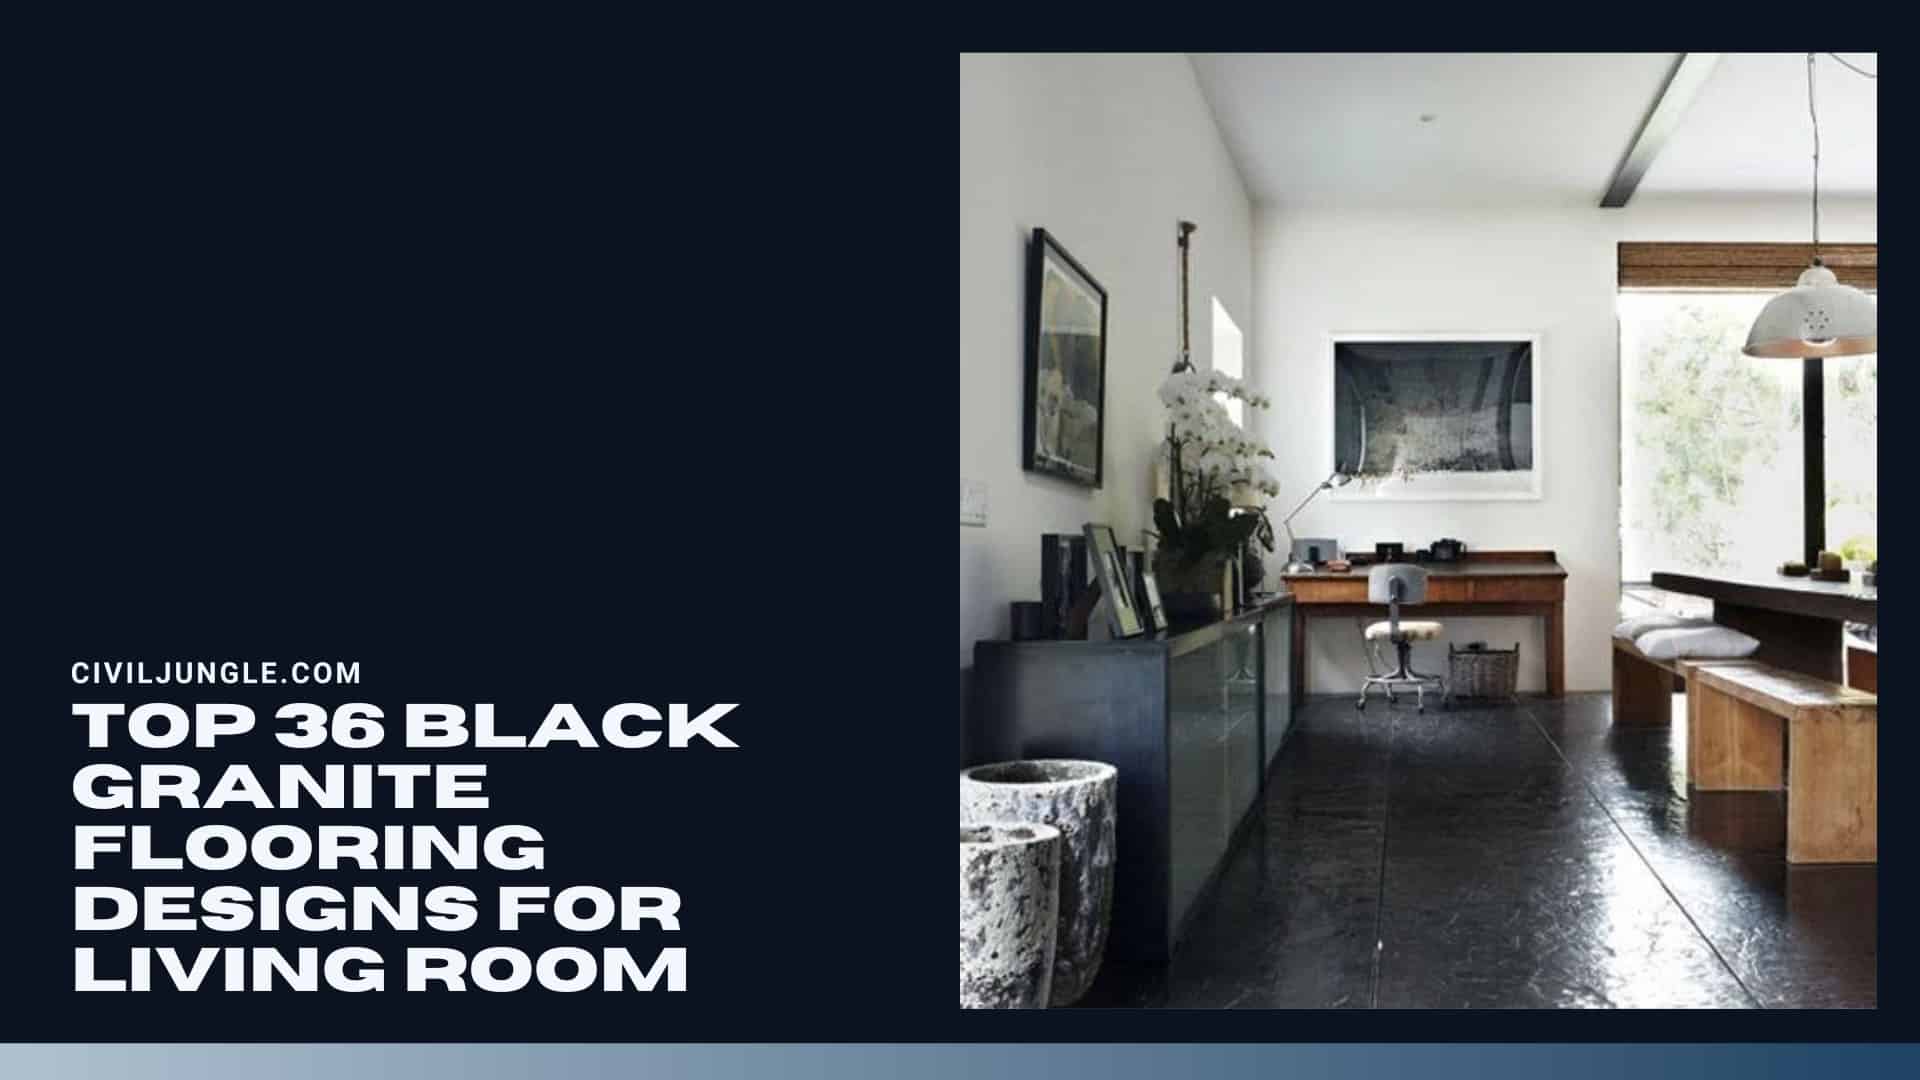 Top 36 Black Granite Flooring Designs for Living Room